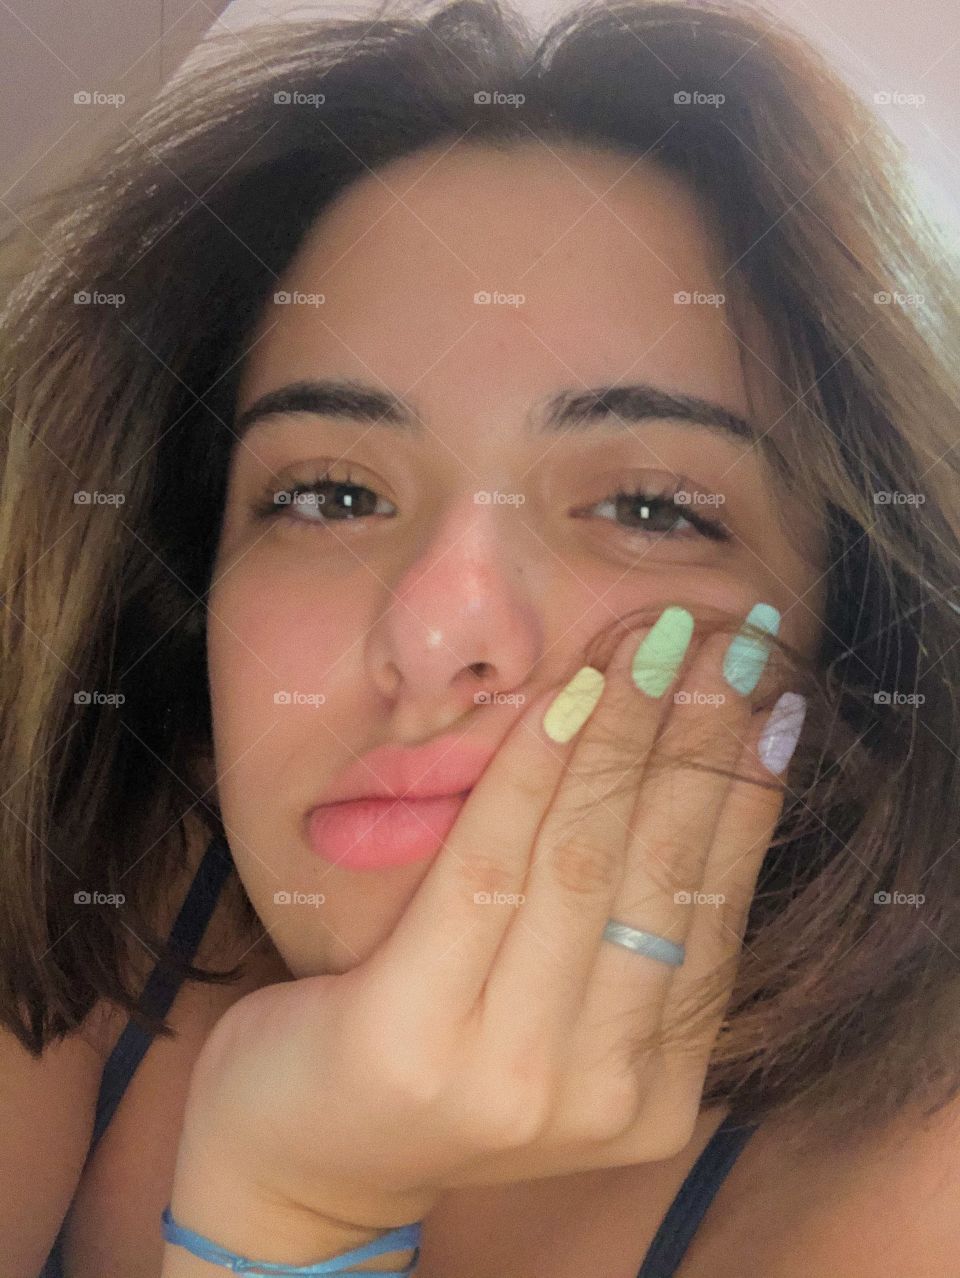 Cute nails girl